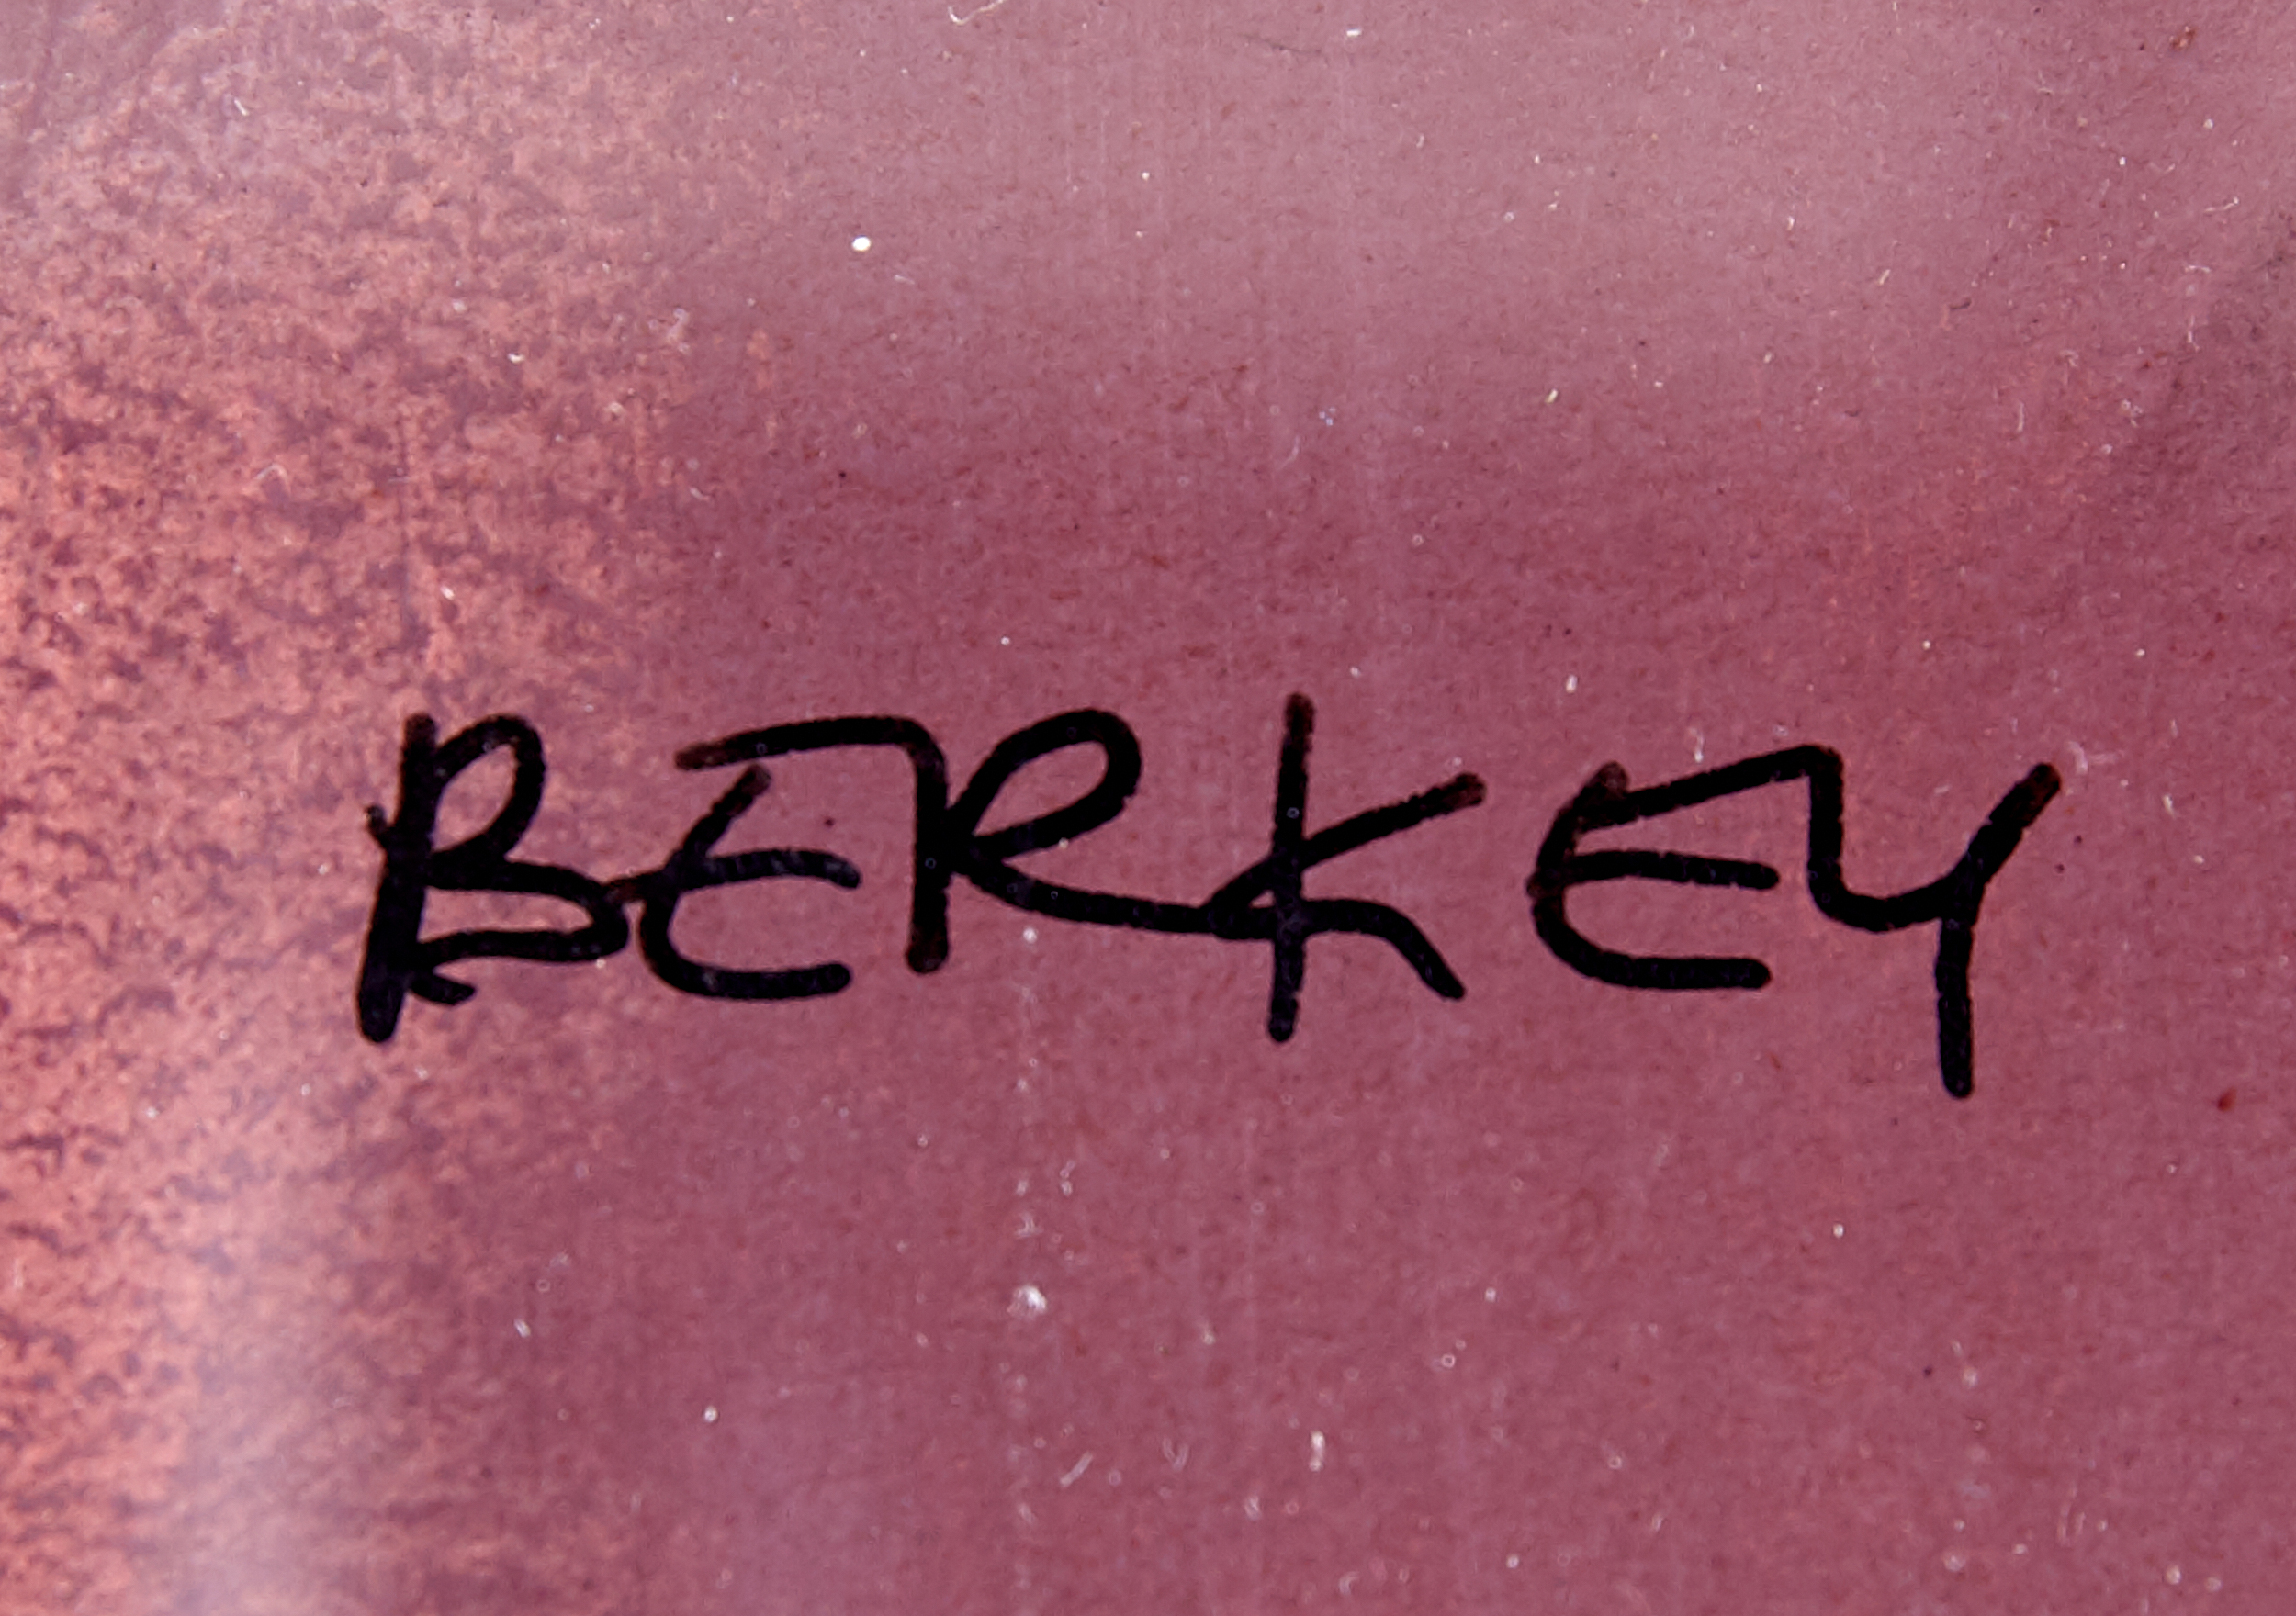 John Berkey Nude Acrylic on Board - Image 3 of 3